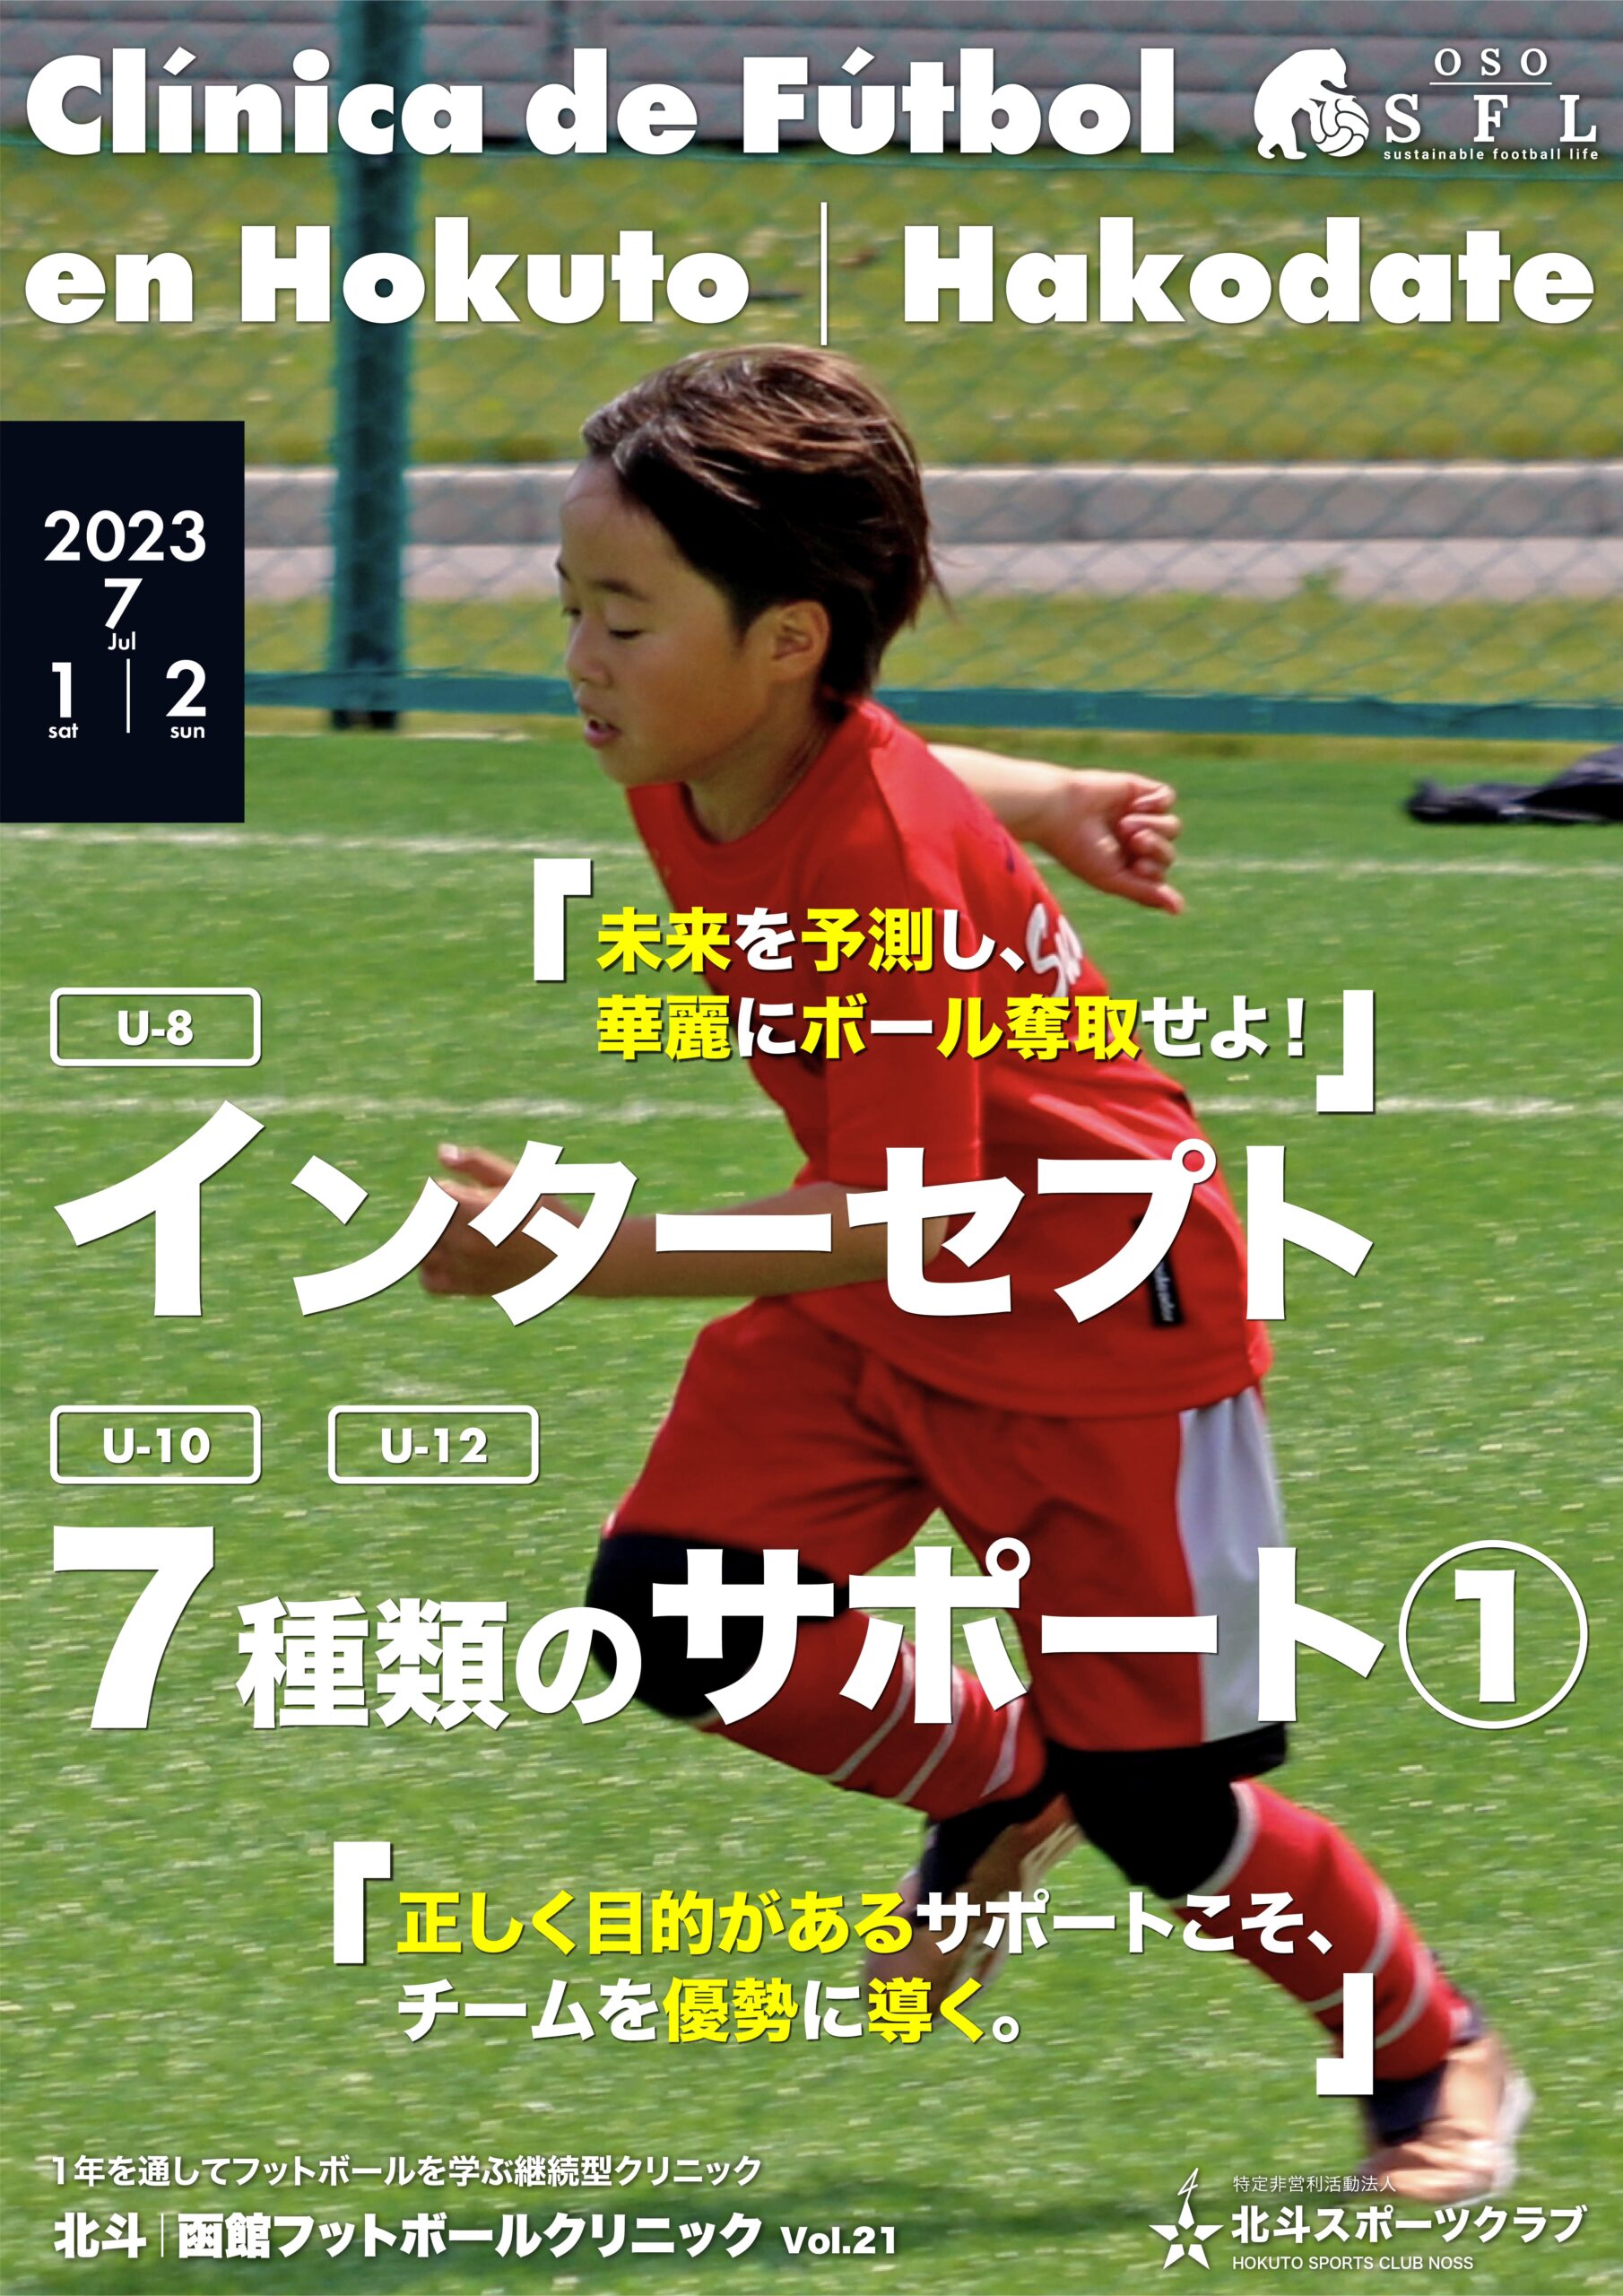 20230612_notice-hokuto-hakodate-football-clinic-2023-vol21_A4-02